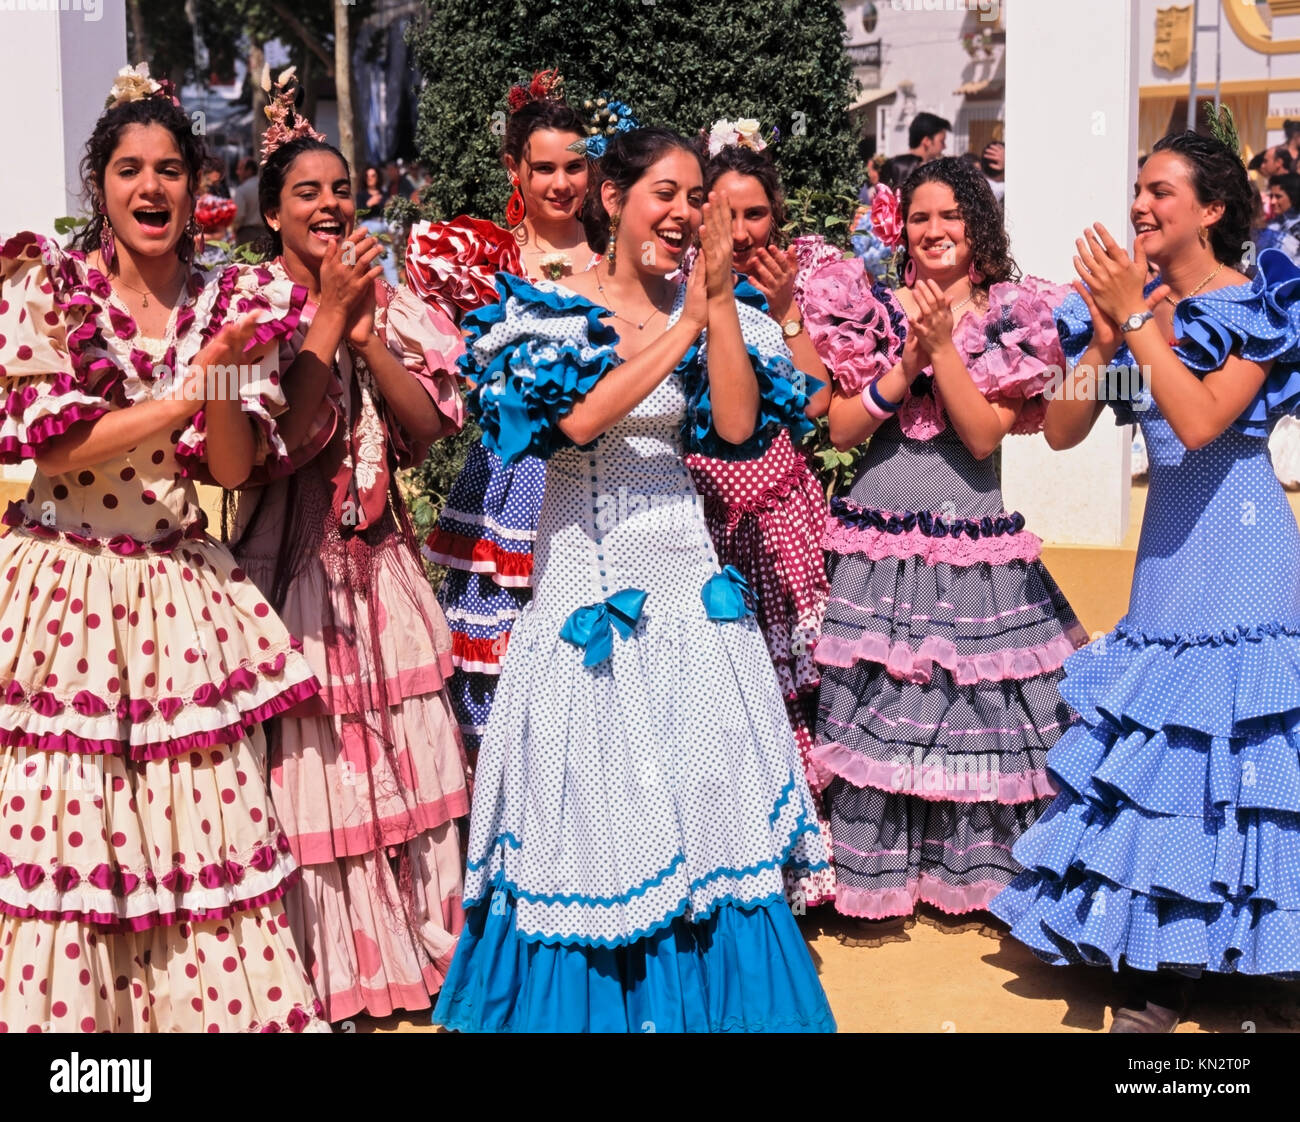 Jerez Horse Fair, Feria del Caballo, woman joyfully clapping dressed in ...